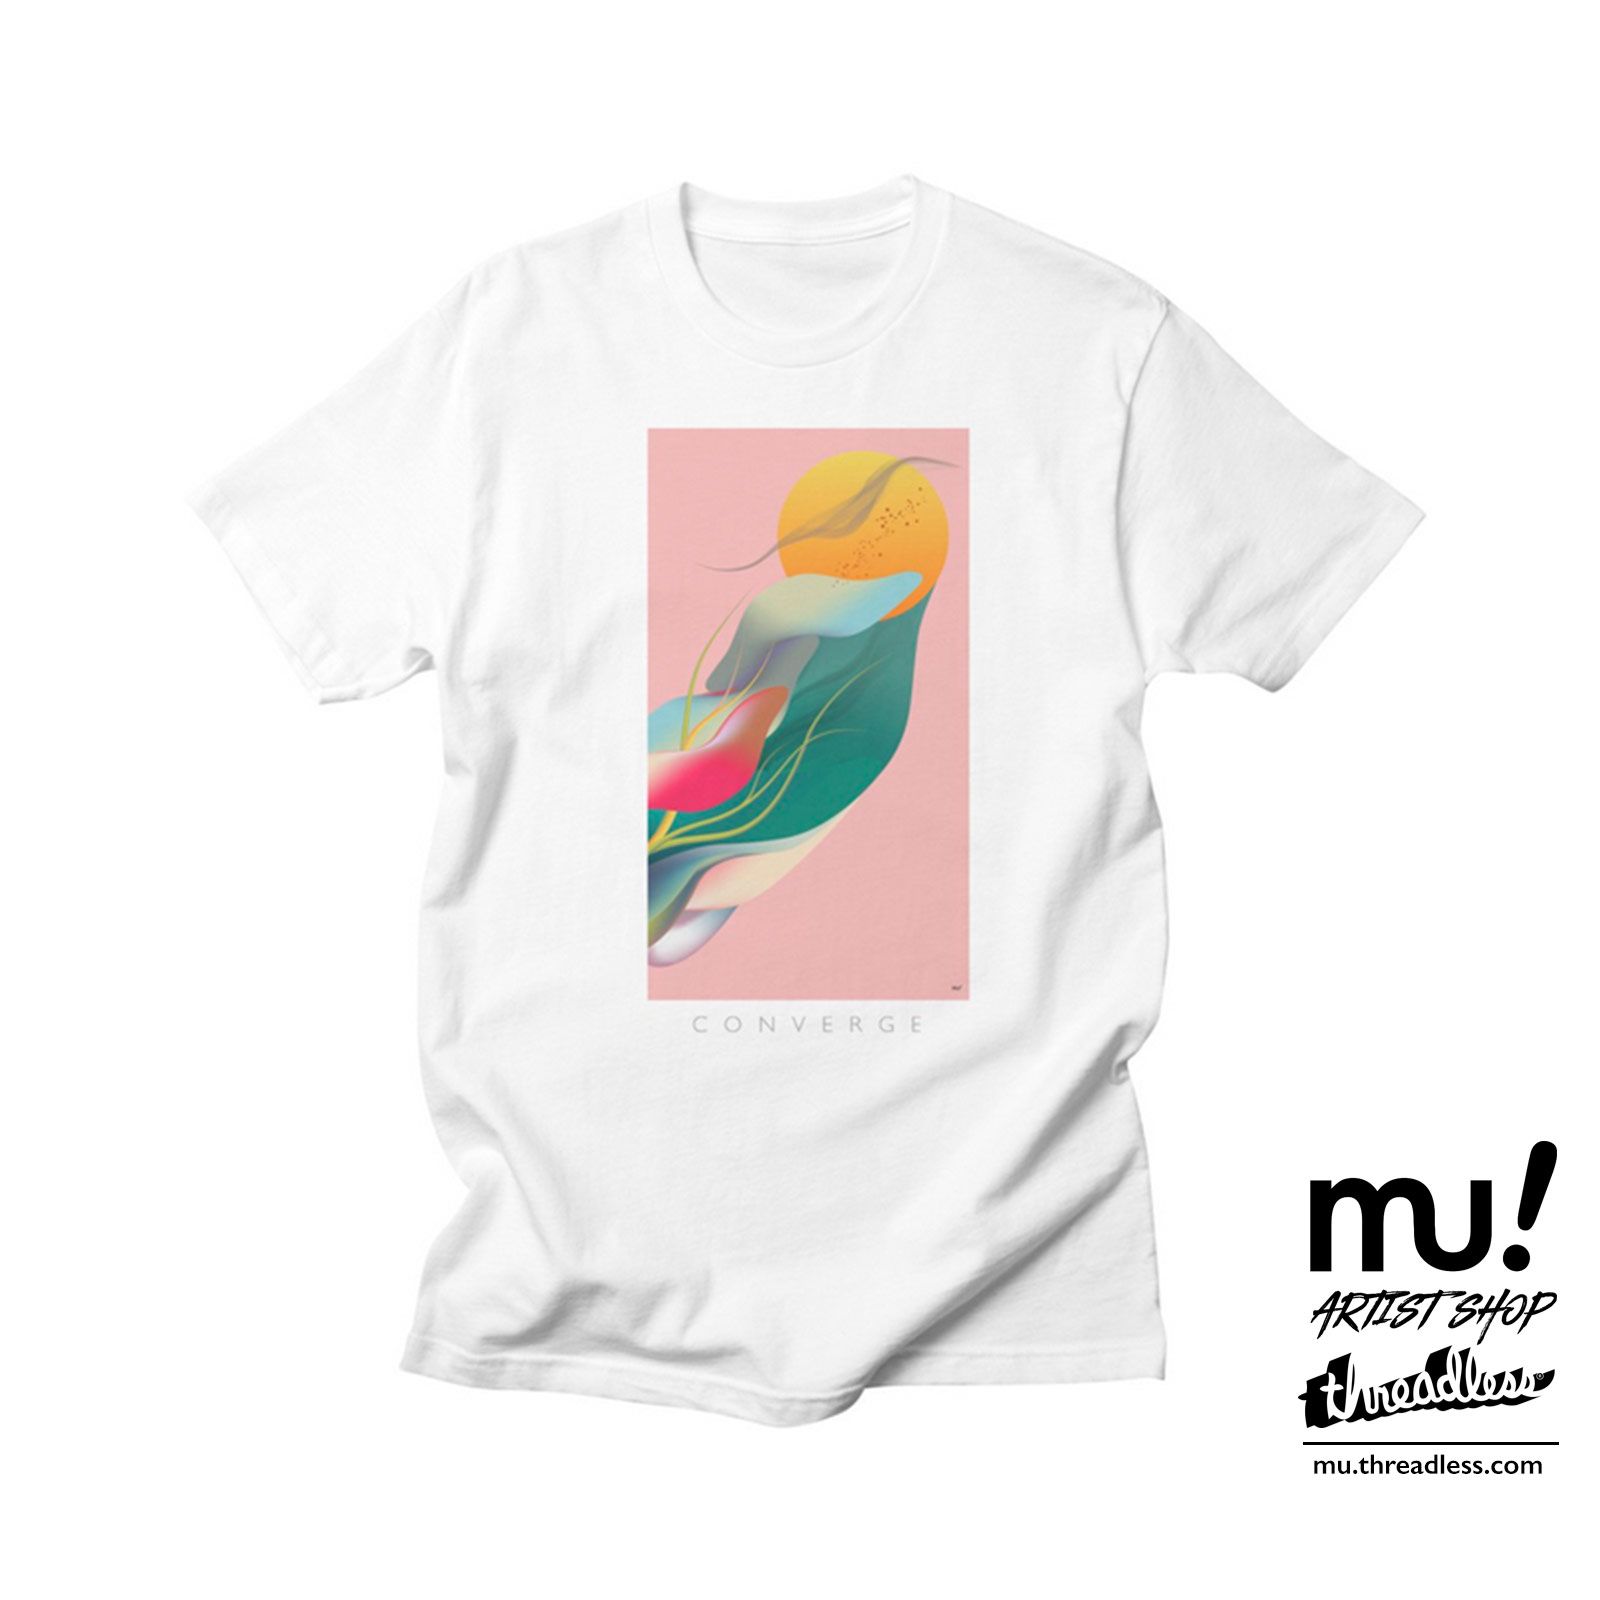 converge-mu-studio-sebastian-murra-vector-illustration-t-shirt-threadless-artist-shop